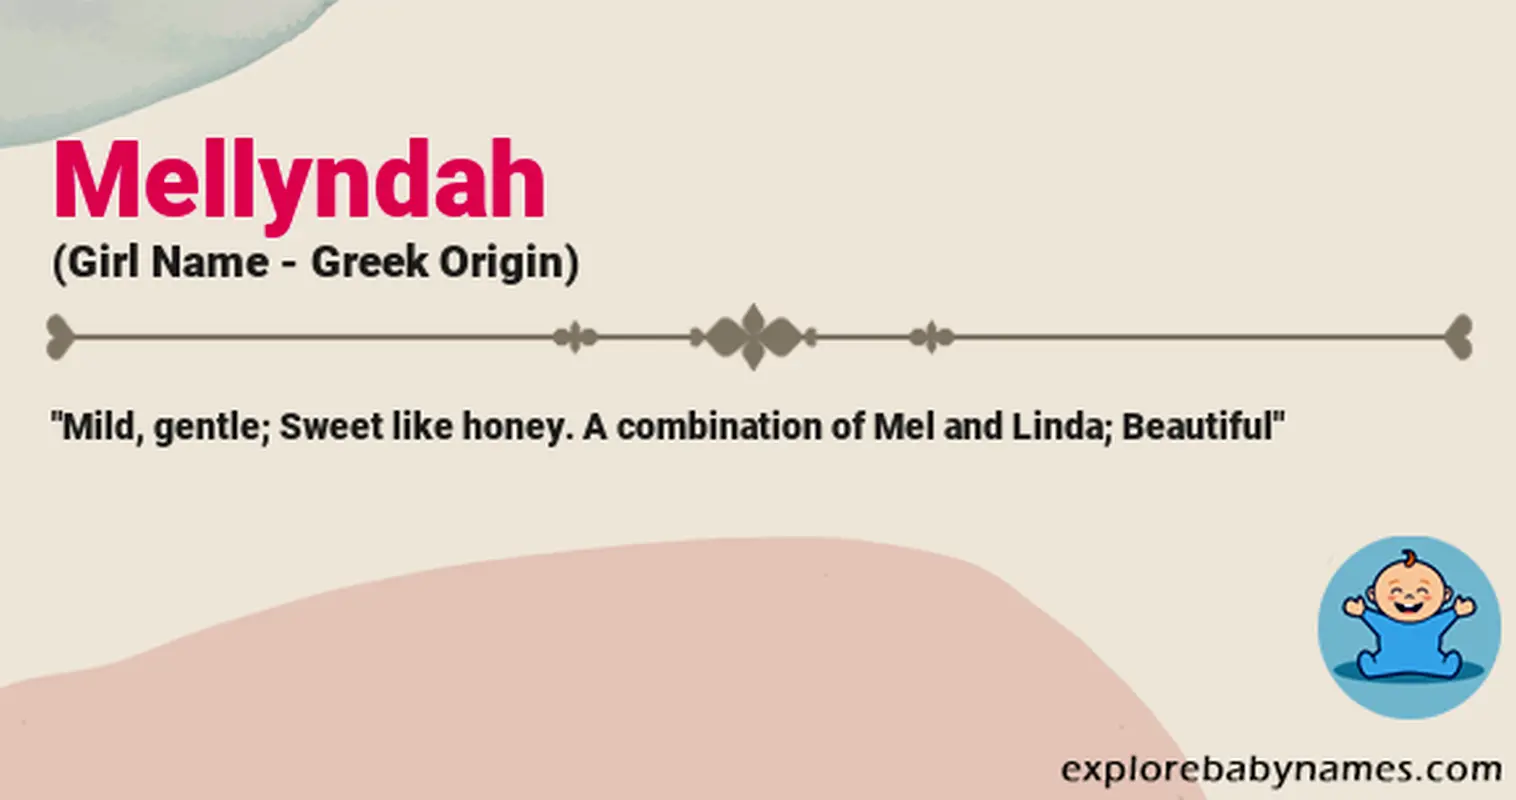 Meaning of Mellyndah